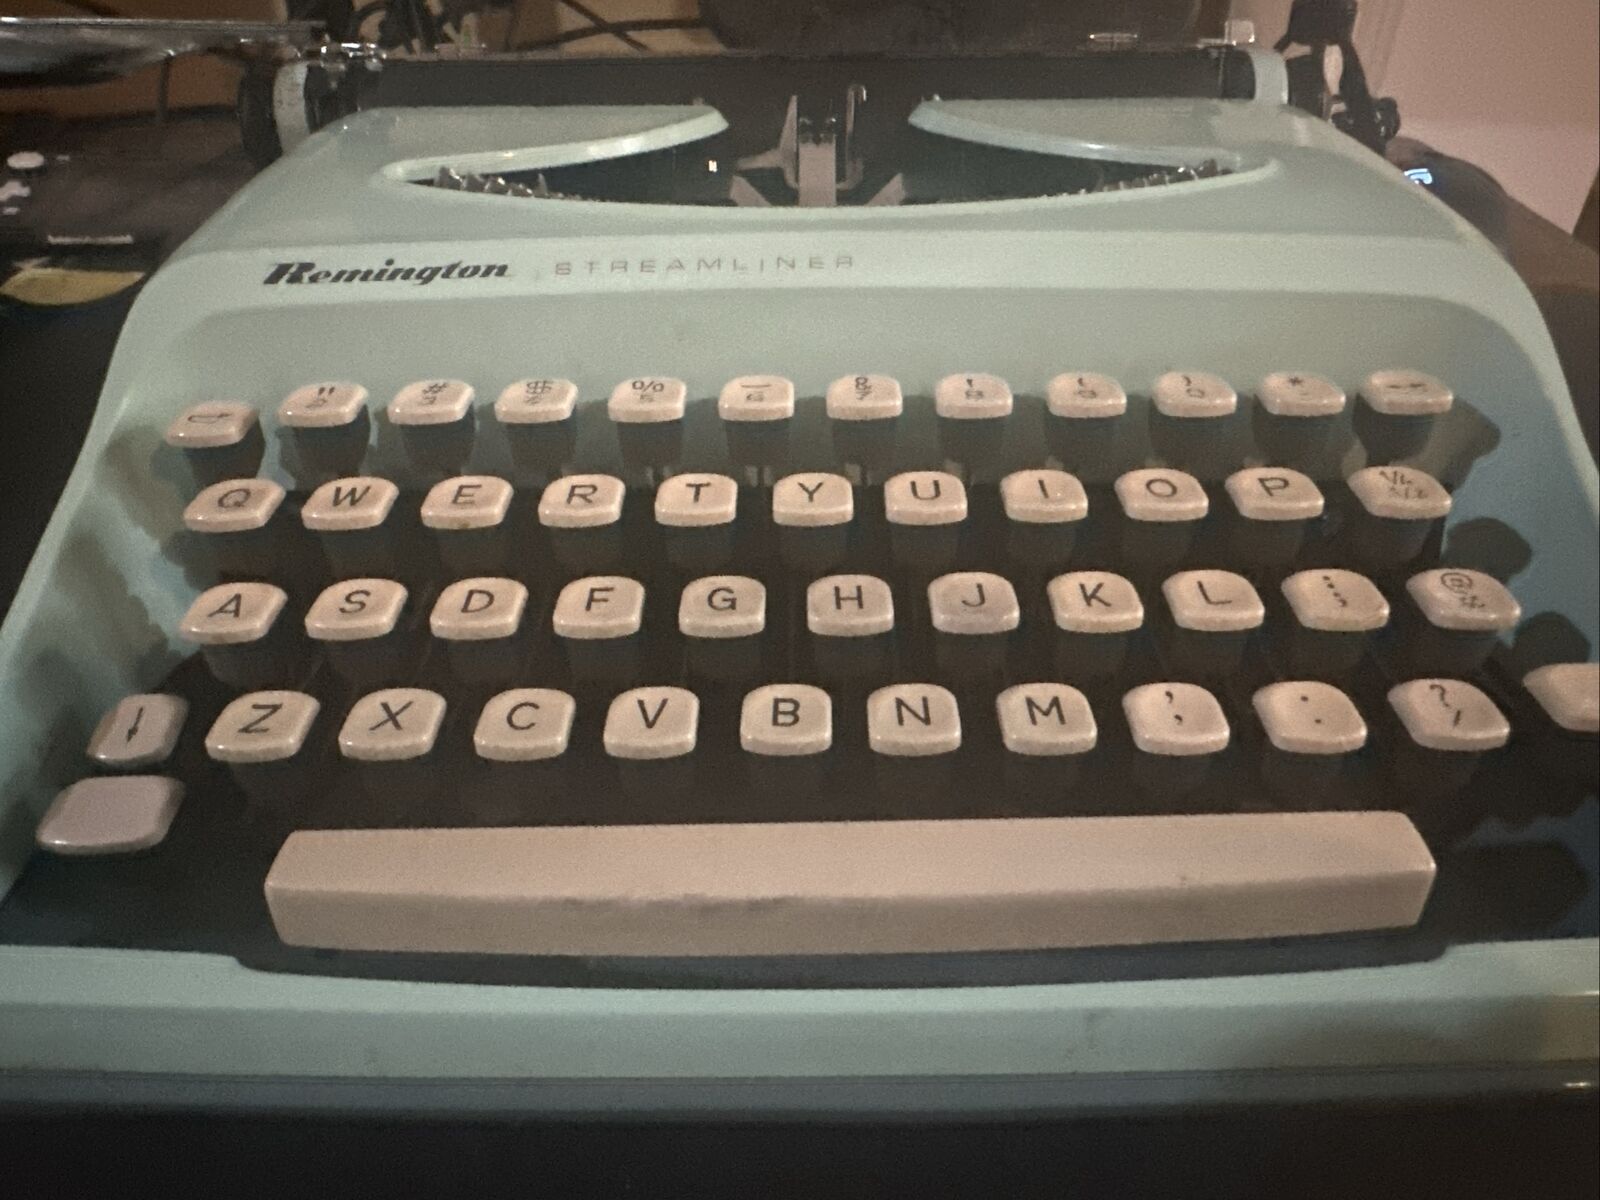 1961 Remington Streamliner Portable Manual Typewriter in Aqua Blue VERY CLEAN